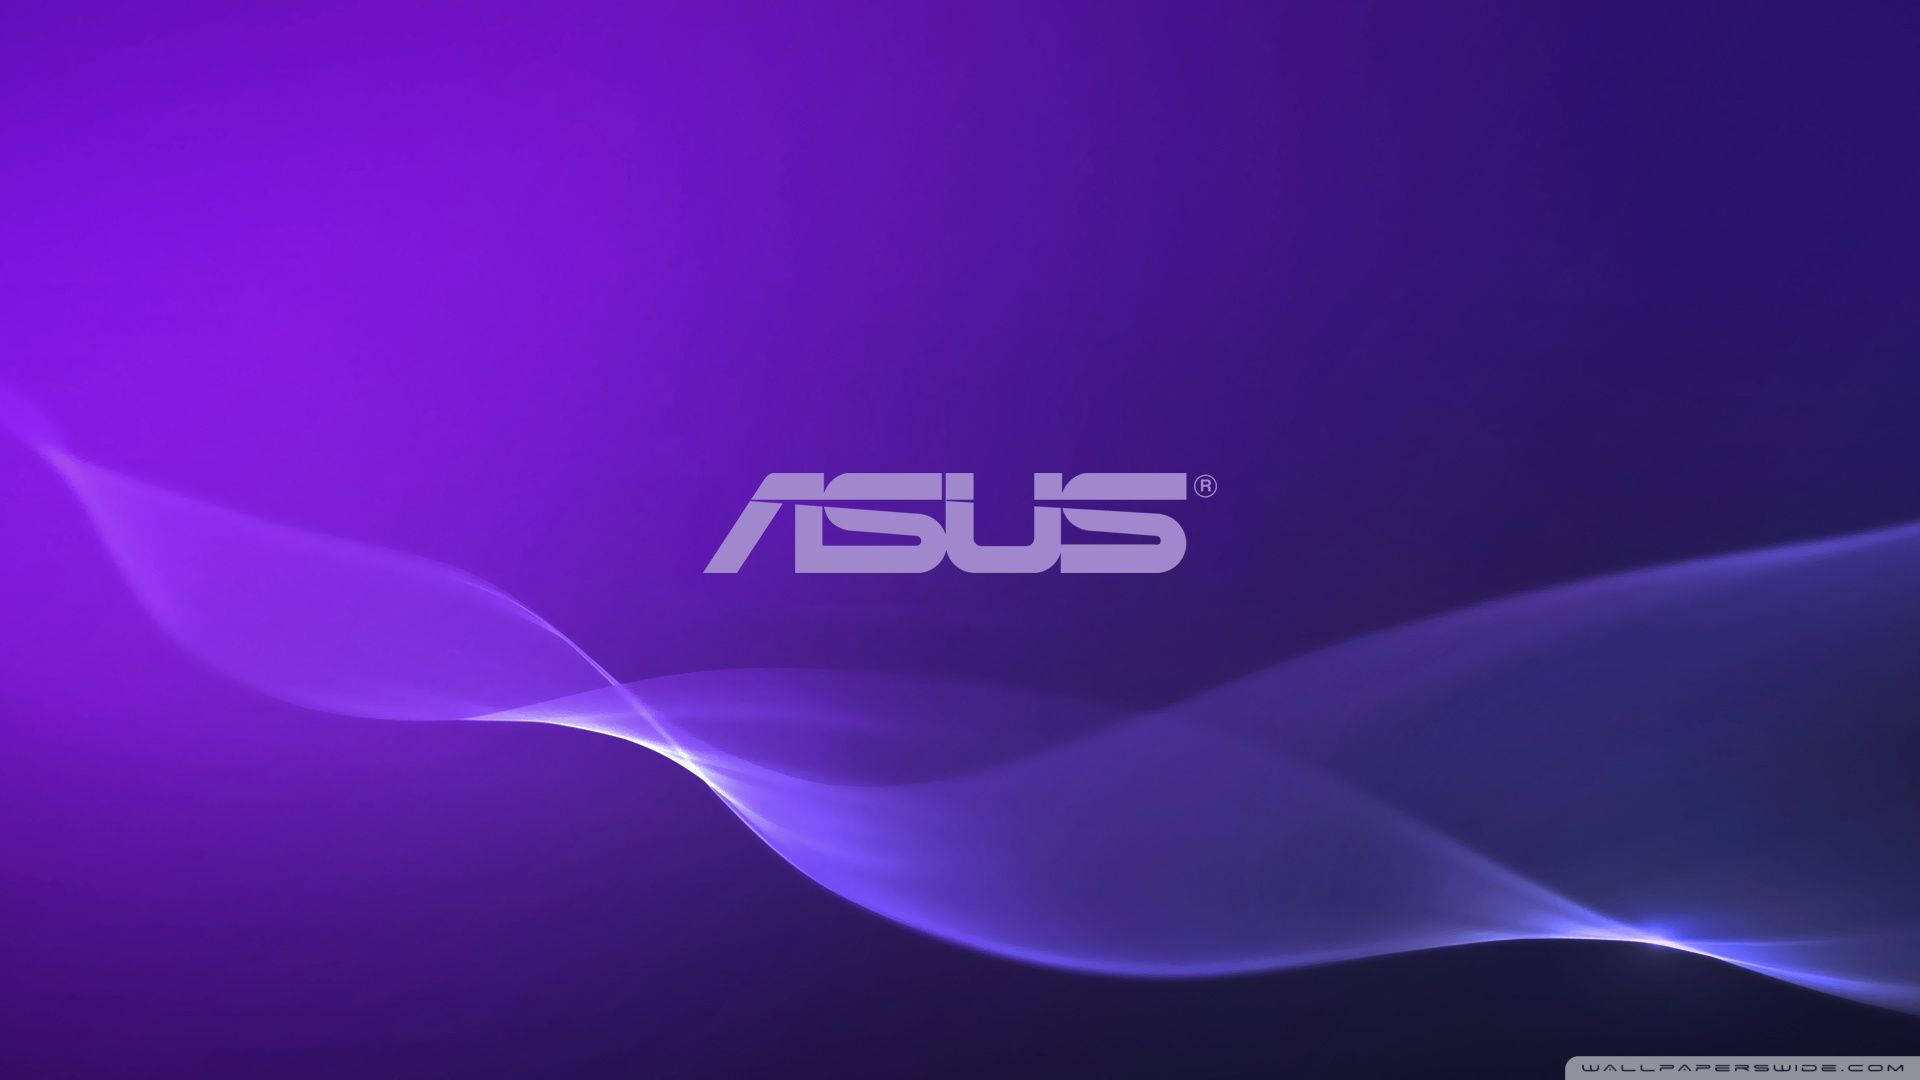 Download wallpaper: Asus ROG neon logo 1366x768